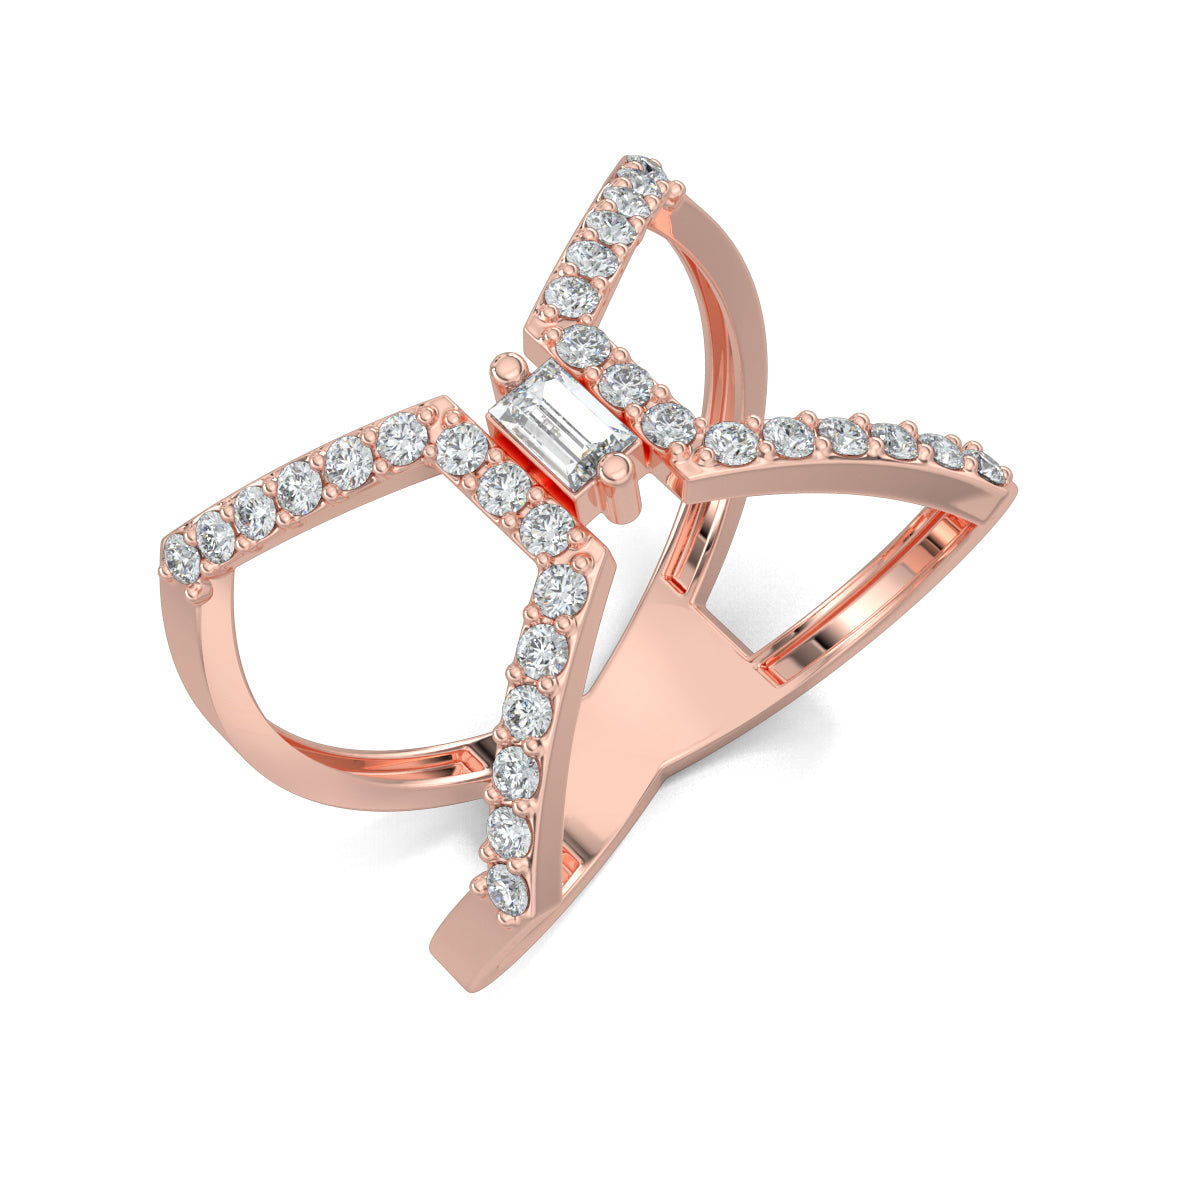 Rose Gold, Diamond Ring, Natural diamond ring, Lab-grown diamond ring, everyday ring, split shank design, butterfly ring, baguette diamond, round diamonds, fashion jewelry, exquisite elegance.